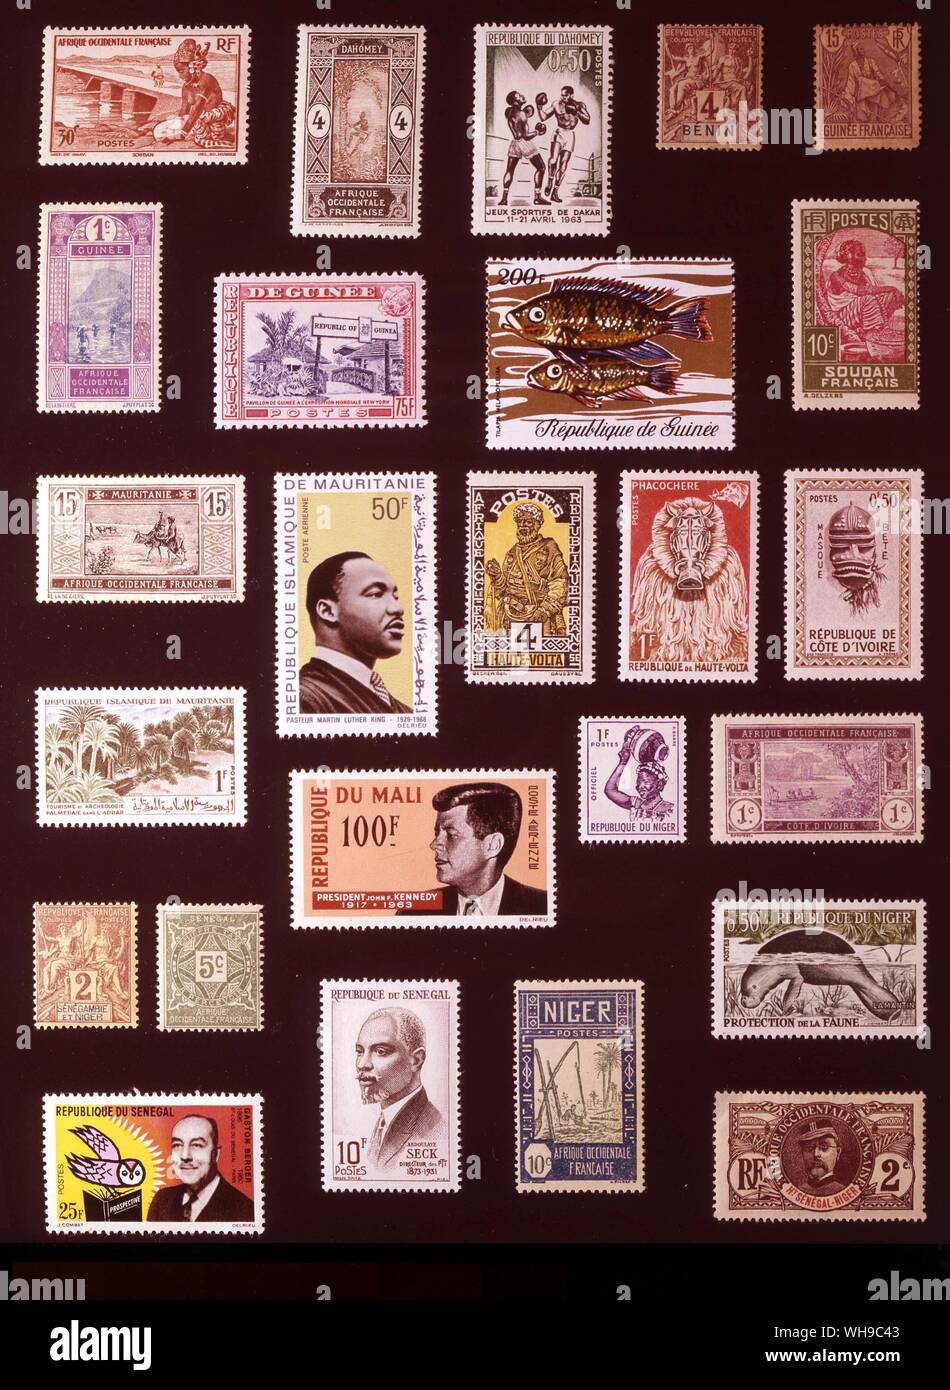 AFRICA - FRENCH WEST AFRICA: (da sinistra a destra) 1. French West Africa, 30 centesimi, 1947, 2. Dazomey, 4 centesimi, 1913, 3. Dahomey, 50 centesimi, 1963, 4. Il Benin, 4 centesimi, 1894, 5. Guinea francese, 15 centesimi, 1904, 6. Guinea francese, 1 centesimo, 1913, 7. Guinea, 75 franchi, 1964, 8. Guinea, 200 franchi, 1971, 9. Il francese Soudan, 10 centesimi, 1931, 10. La Mauritania, 15 centesimi, 1913, 11. La Mauritania, 50 franchi, 1968, 12. Volta Superiore, 4 centesimi, 1928 13. Volta Superiore, 1 franco, 1960, 14. La Costa d Avorio, 50 centesimi, 1960, 15. La Mauritania, 1 franco, 1965, 16. Mali, 100 franchi, 1964, 17. Niger, 1 franco, 1962, Foto Stock